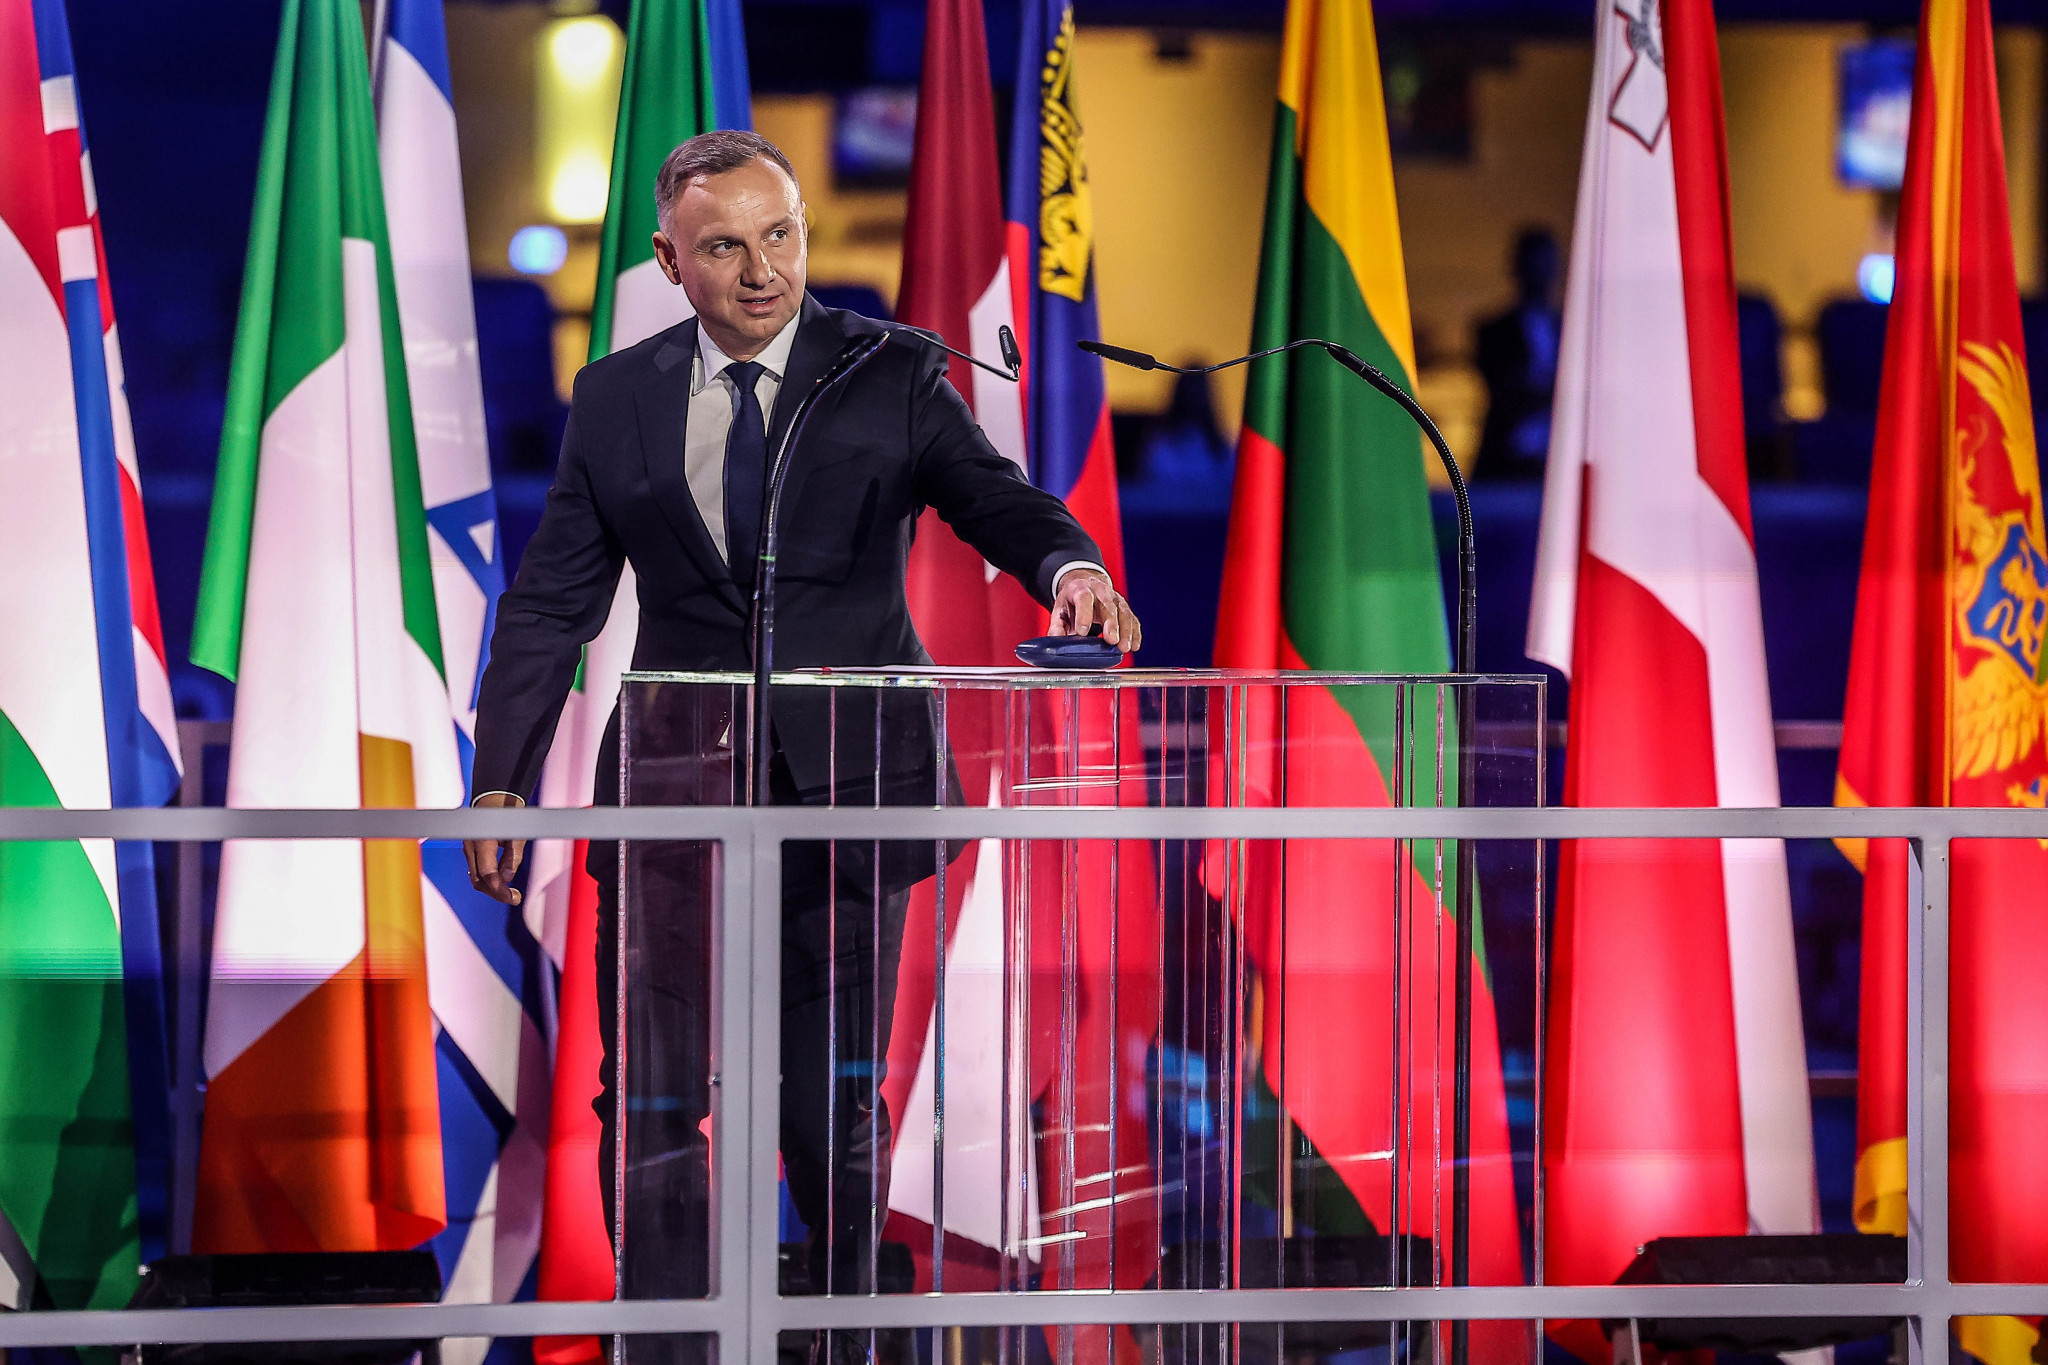 Polish President Polish President Andrzej Duda had also faced some boos before officially opening the European Games ©Kraków-Małopolska 2023